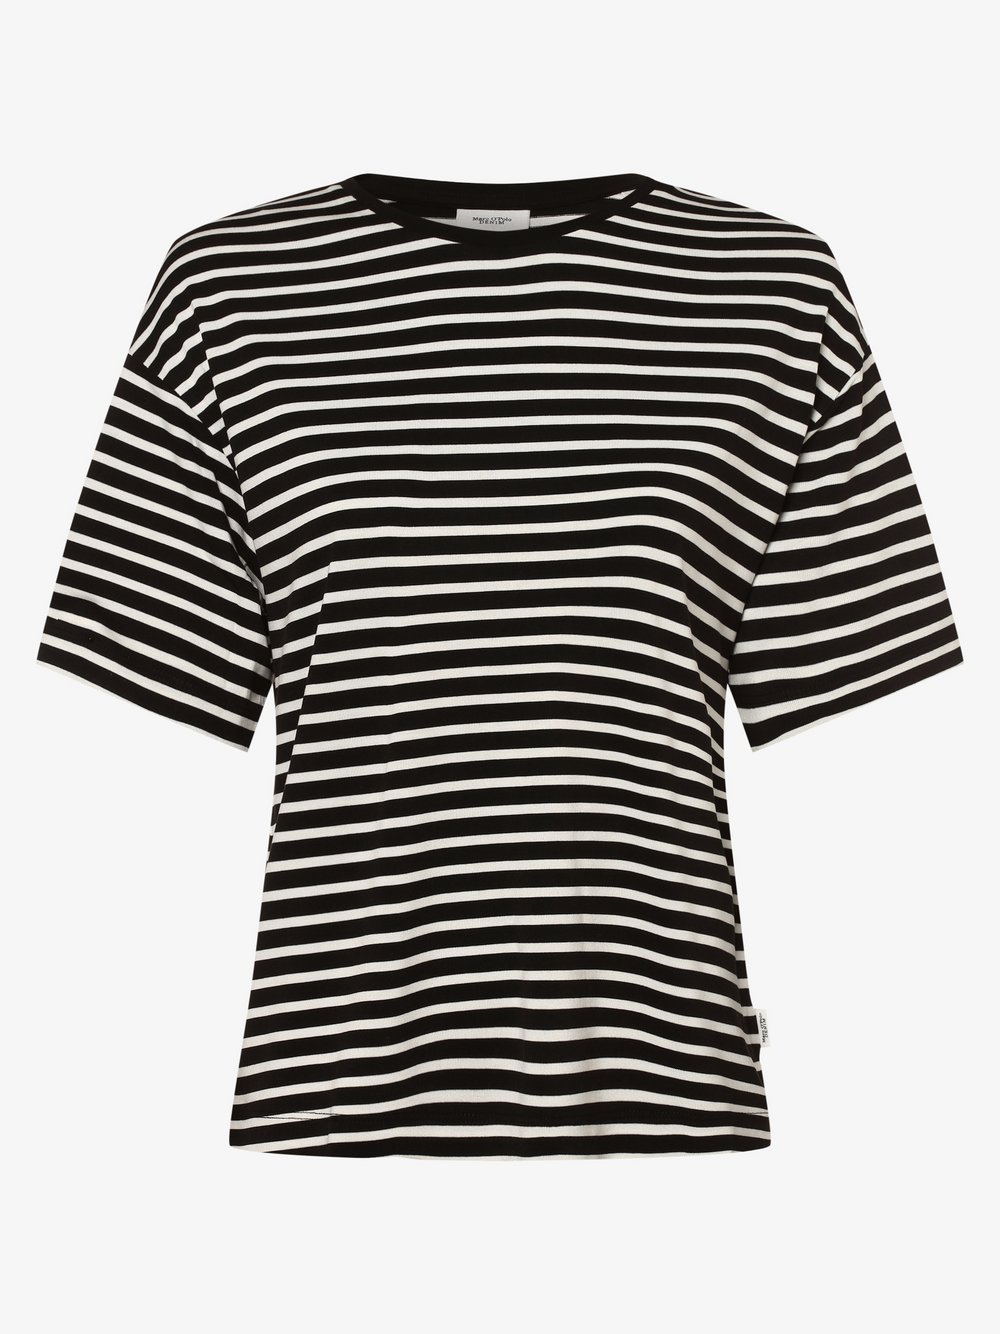 Marc O'Polo Denim - T-shirt damski, czarny